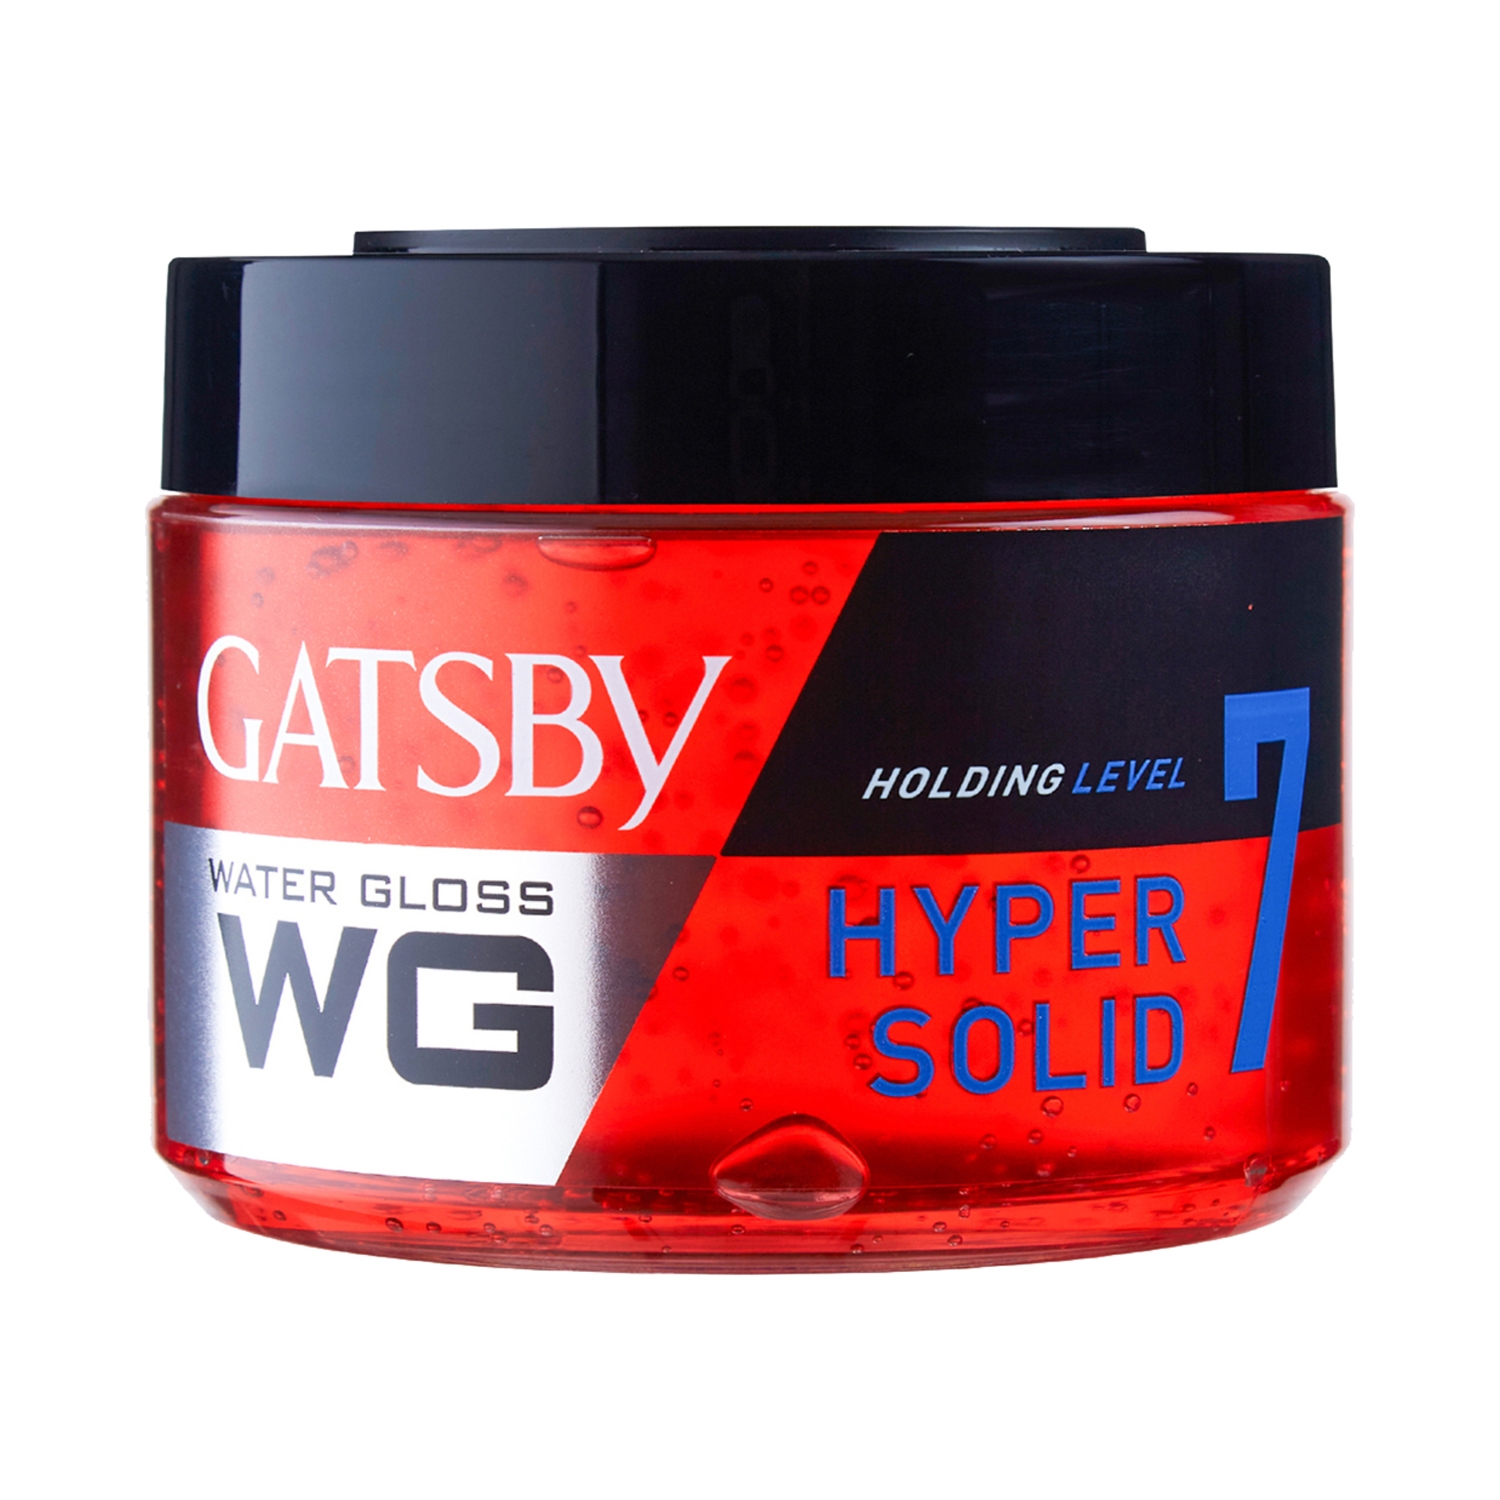 Gatsby | Gatsby Water Gloss Hyper Solid Gel (300g)